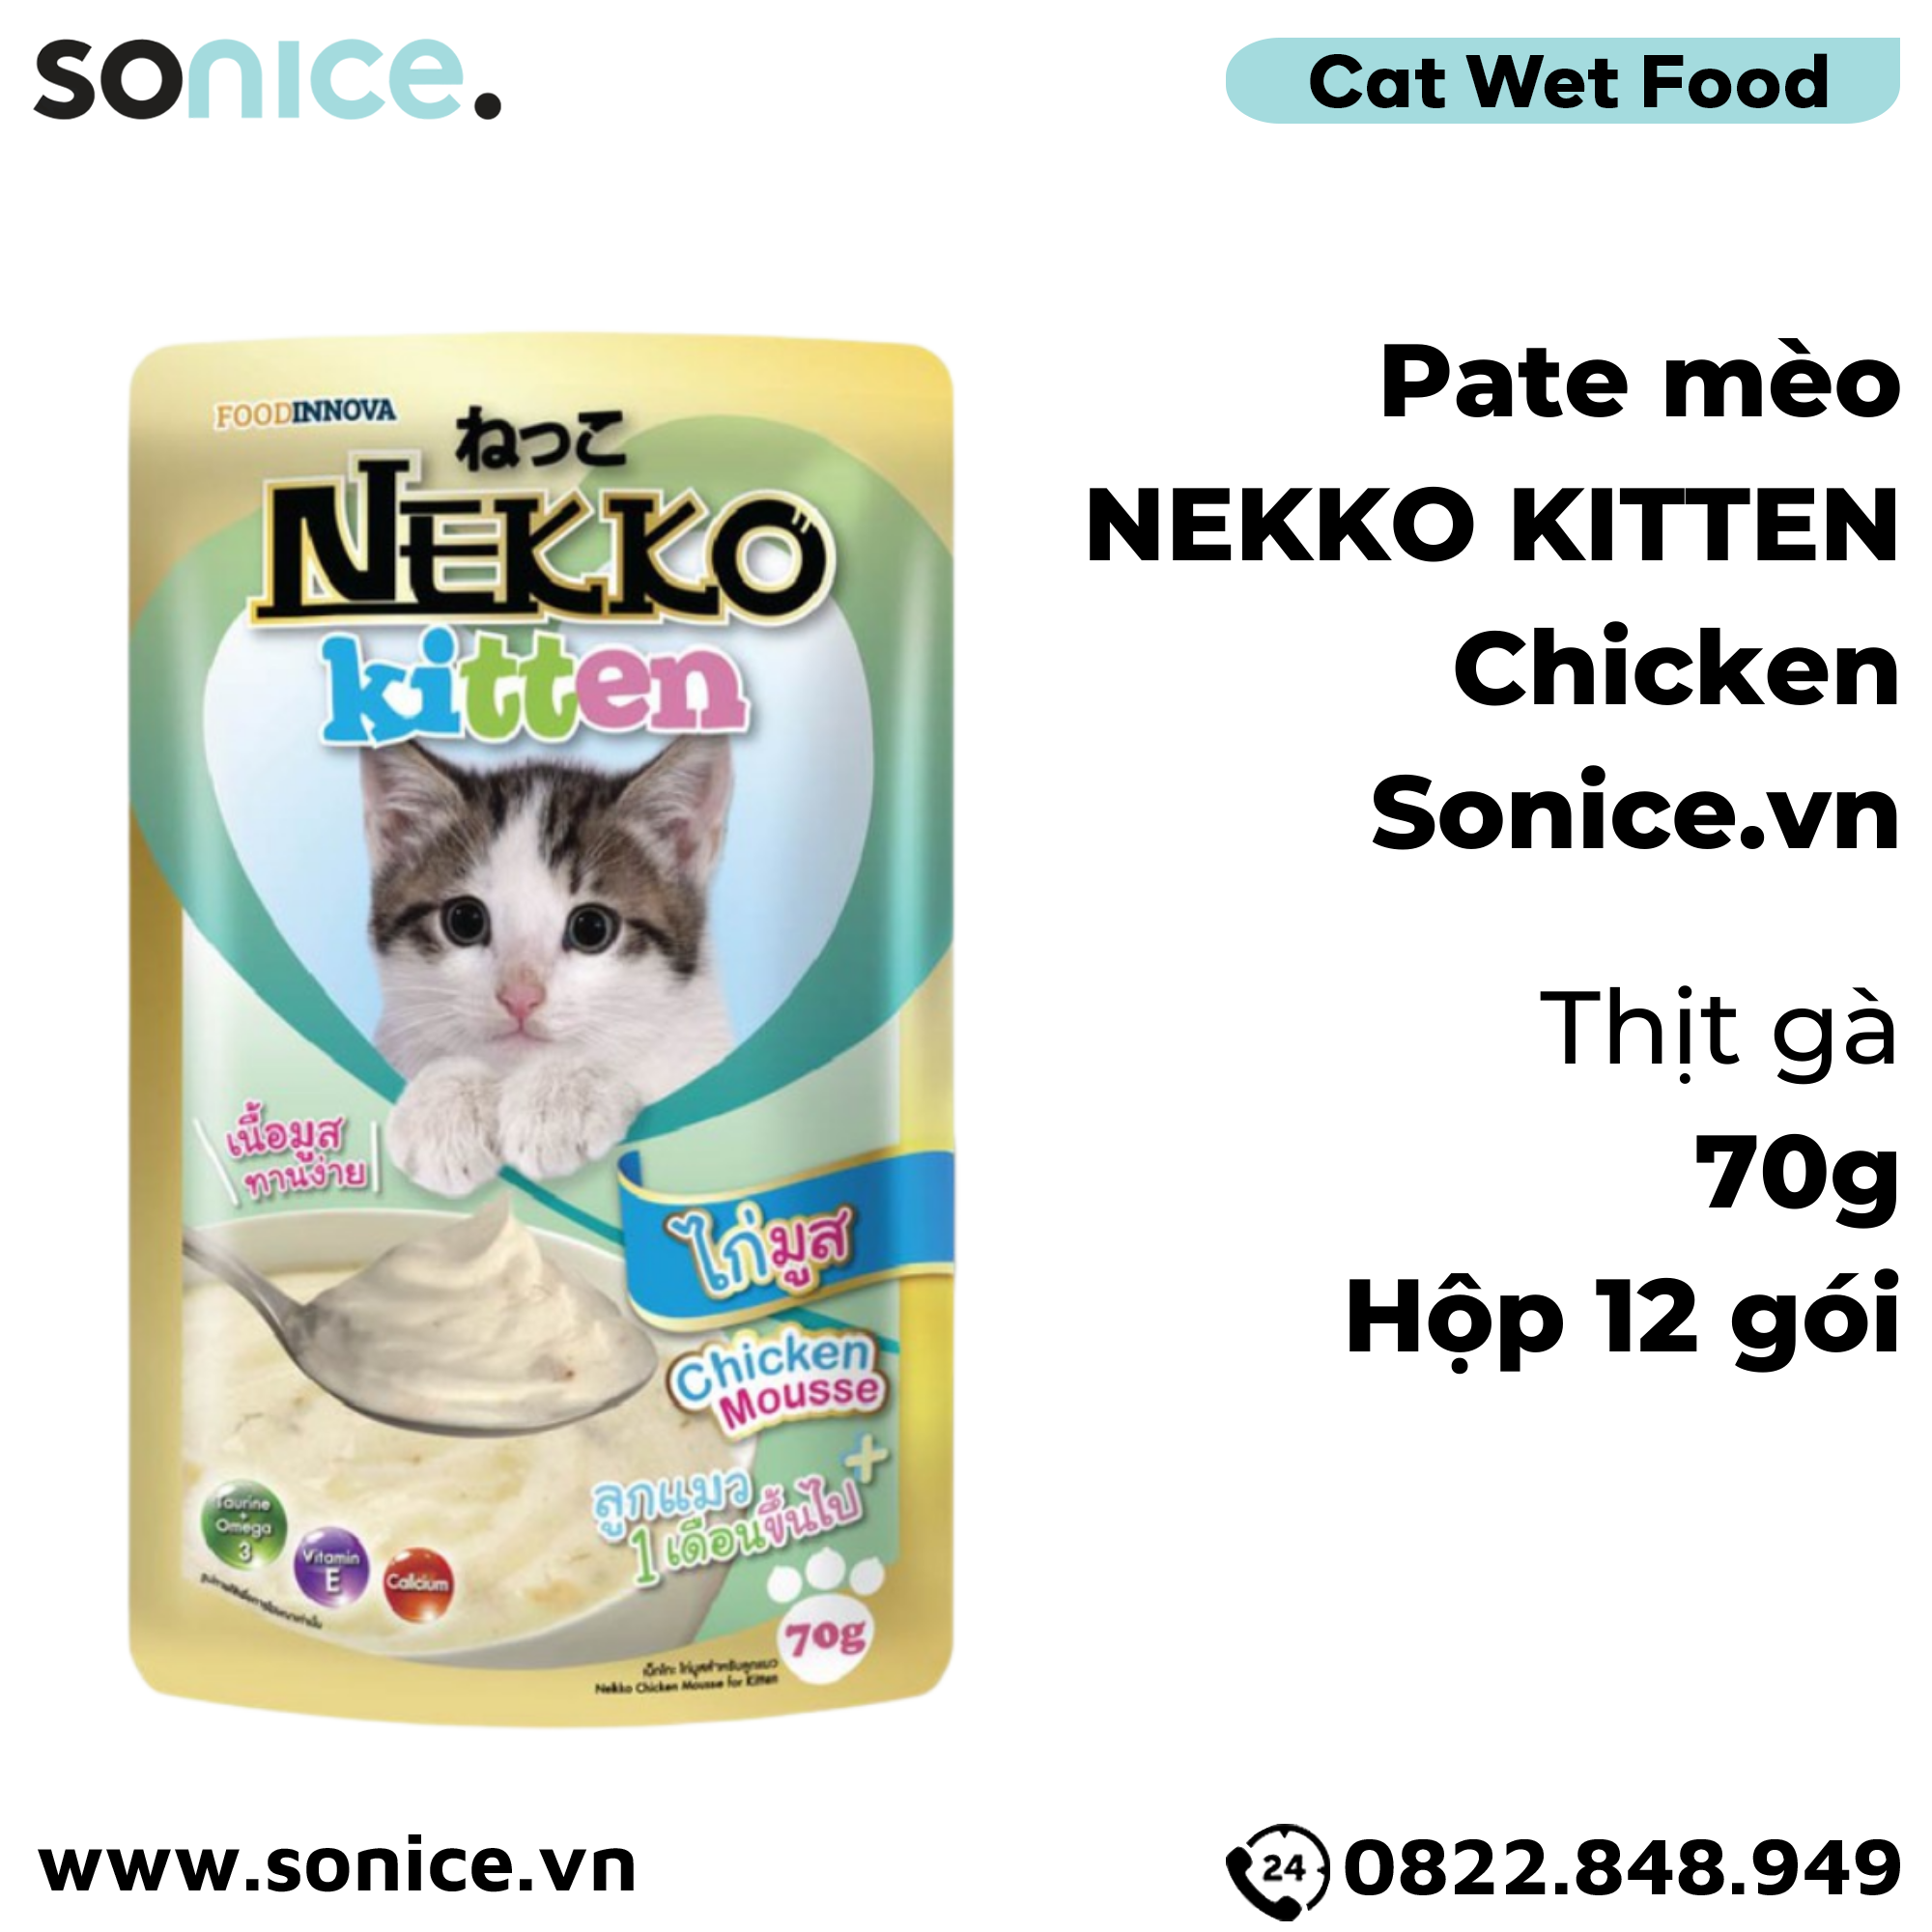  Pate mèo NEKKO KITTEN Chicken 70g - 1 hộp 12 gói SONICE. 